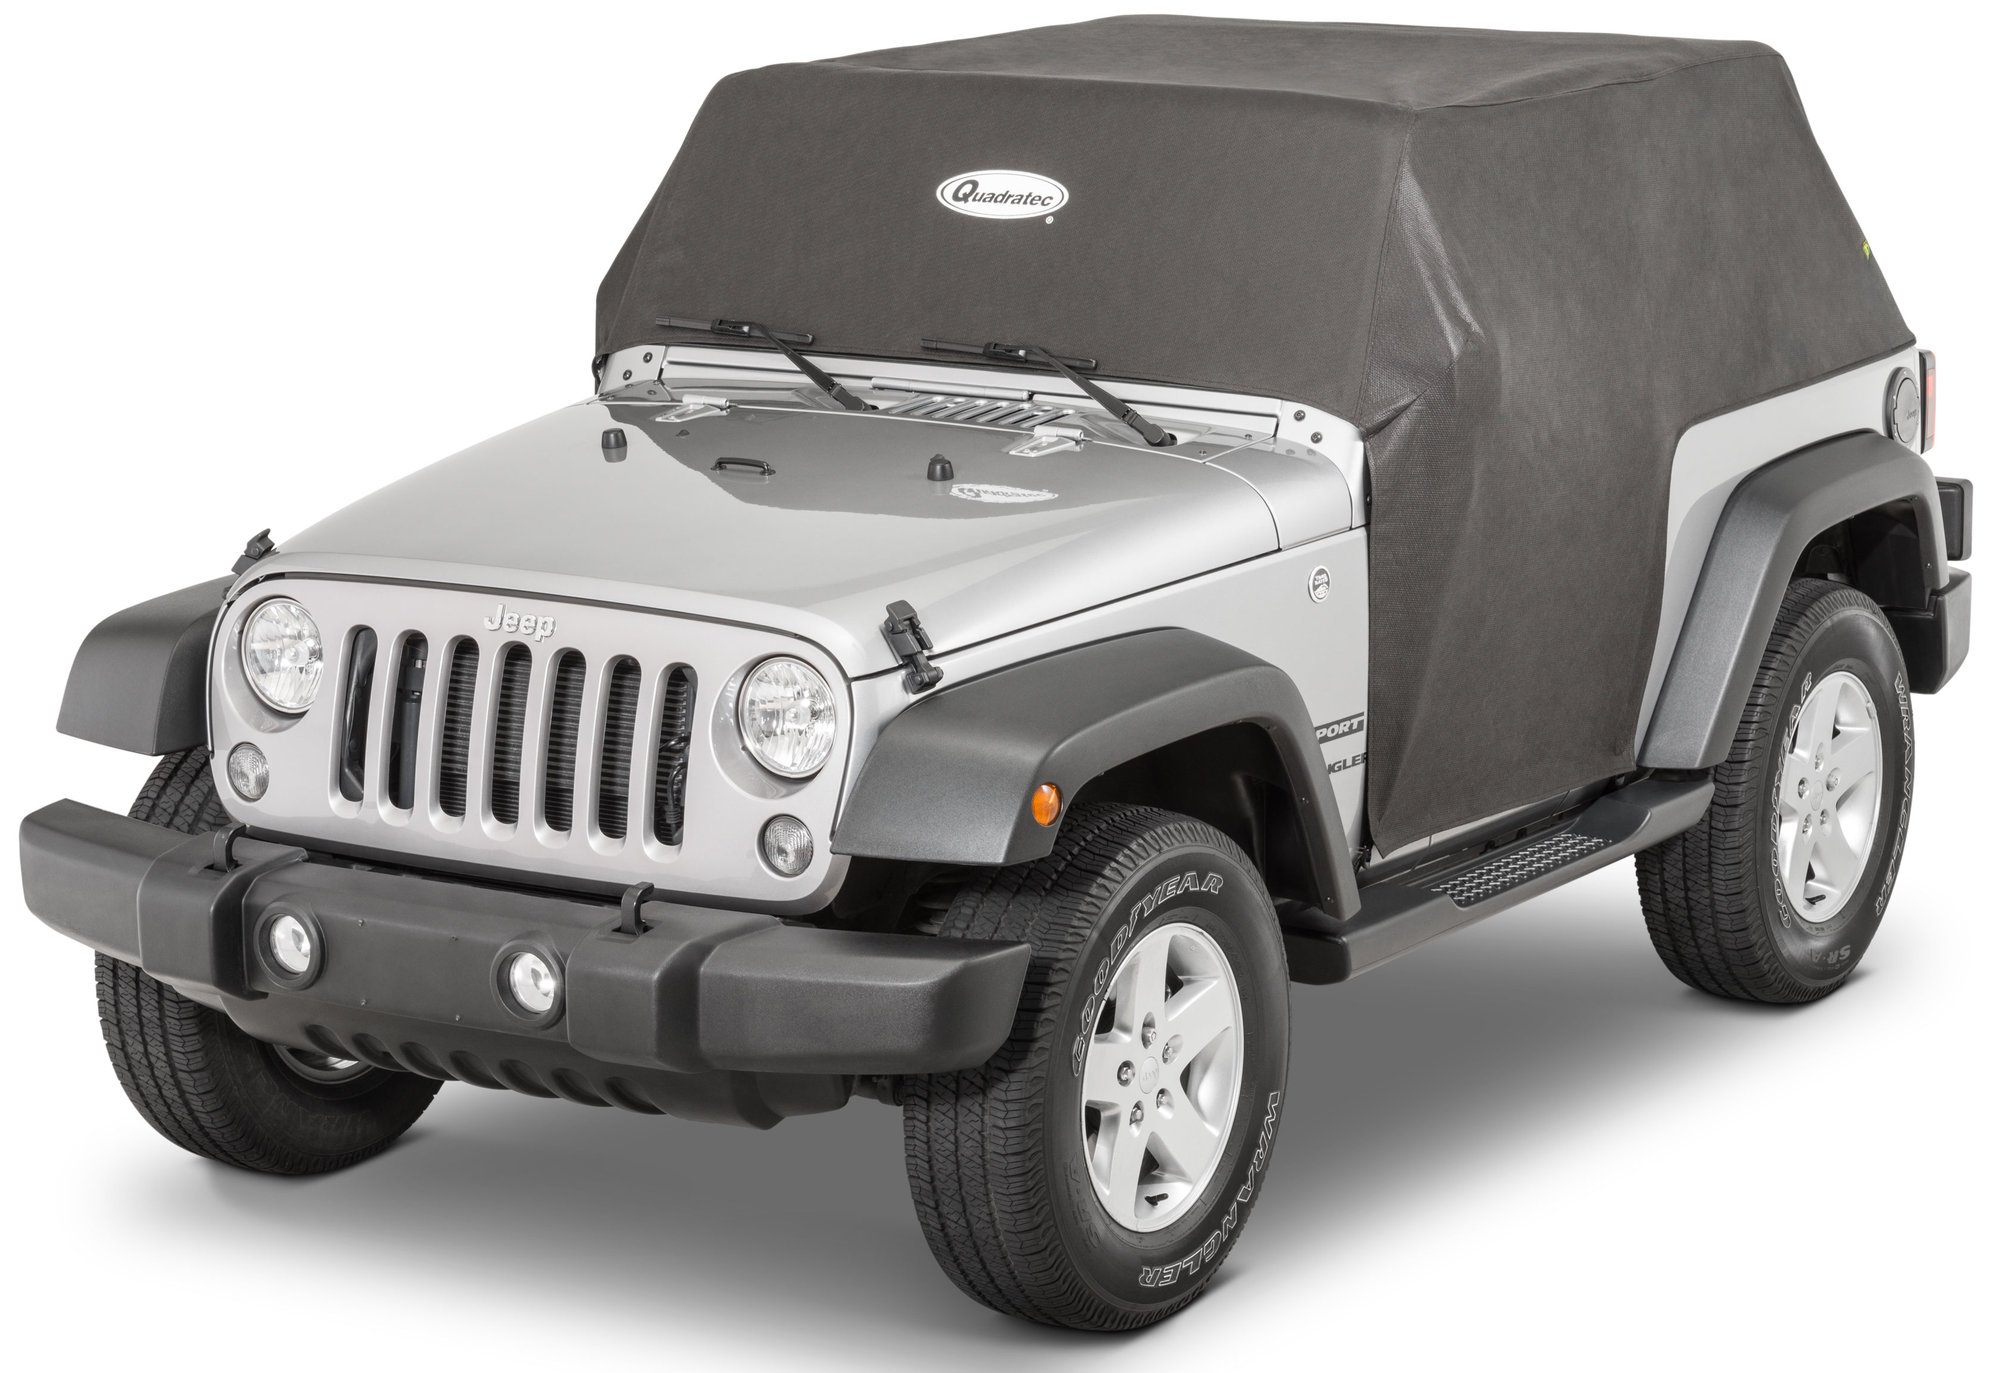 Quadratec Softbond 5-Layer Cab Cover For 07-18 Jeep Wrangler JK 2-Door |  Quadratec